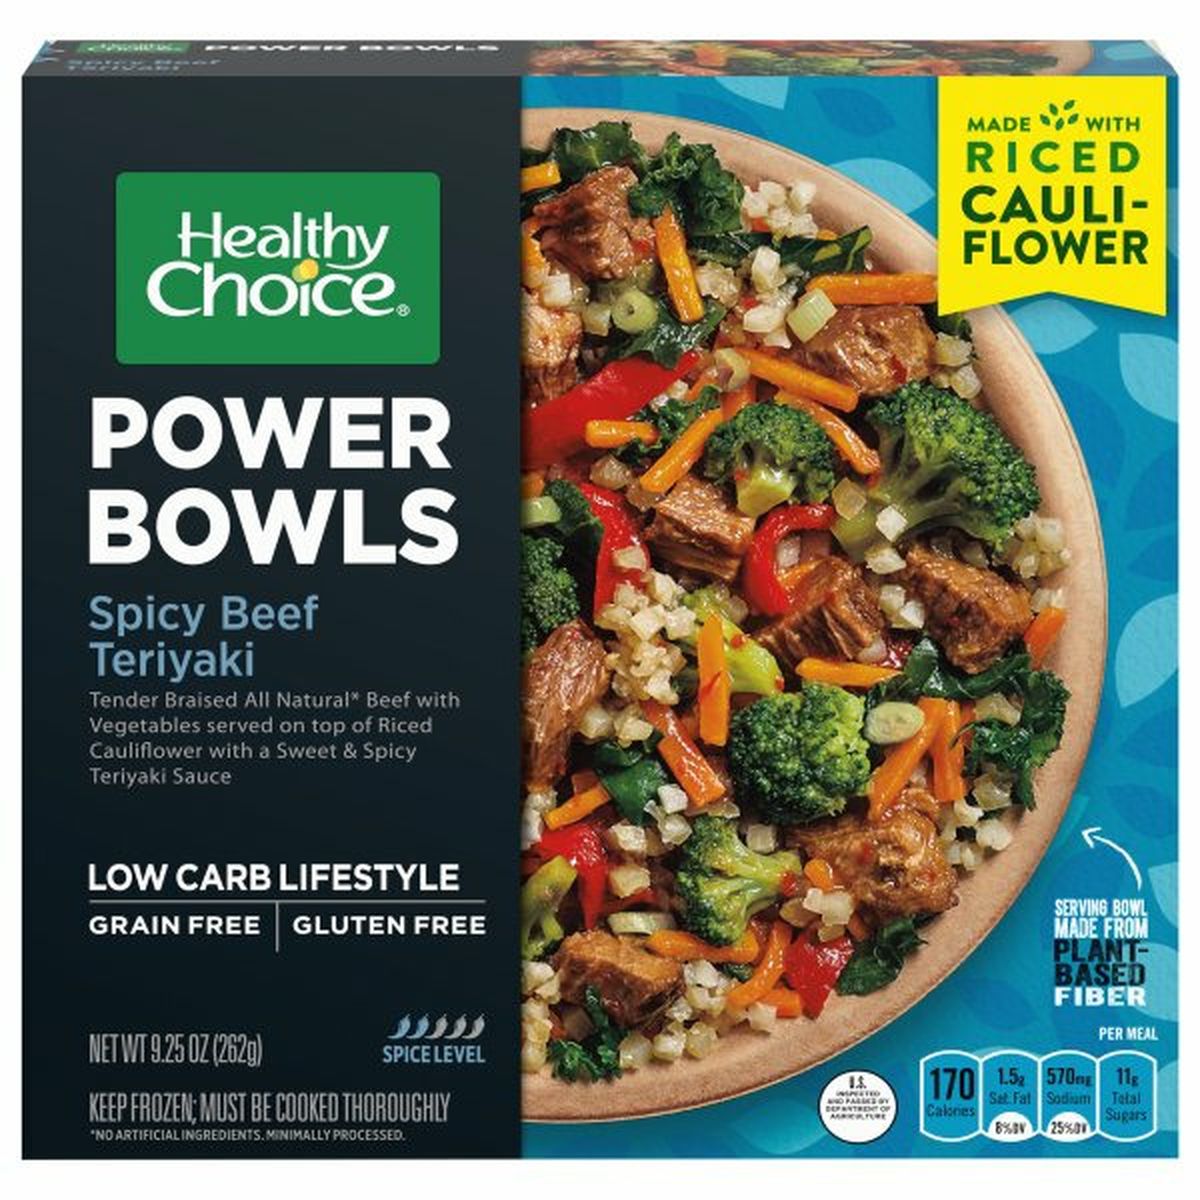 Calories in Healthy Choice Power Bowls, Spicy Beef Teriyaki